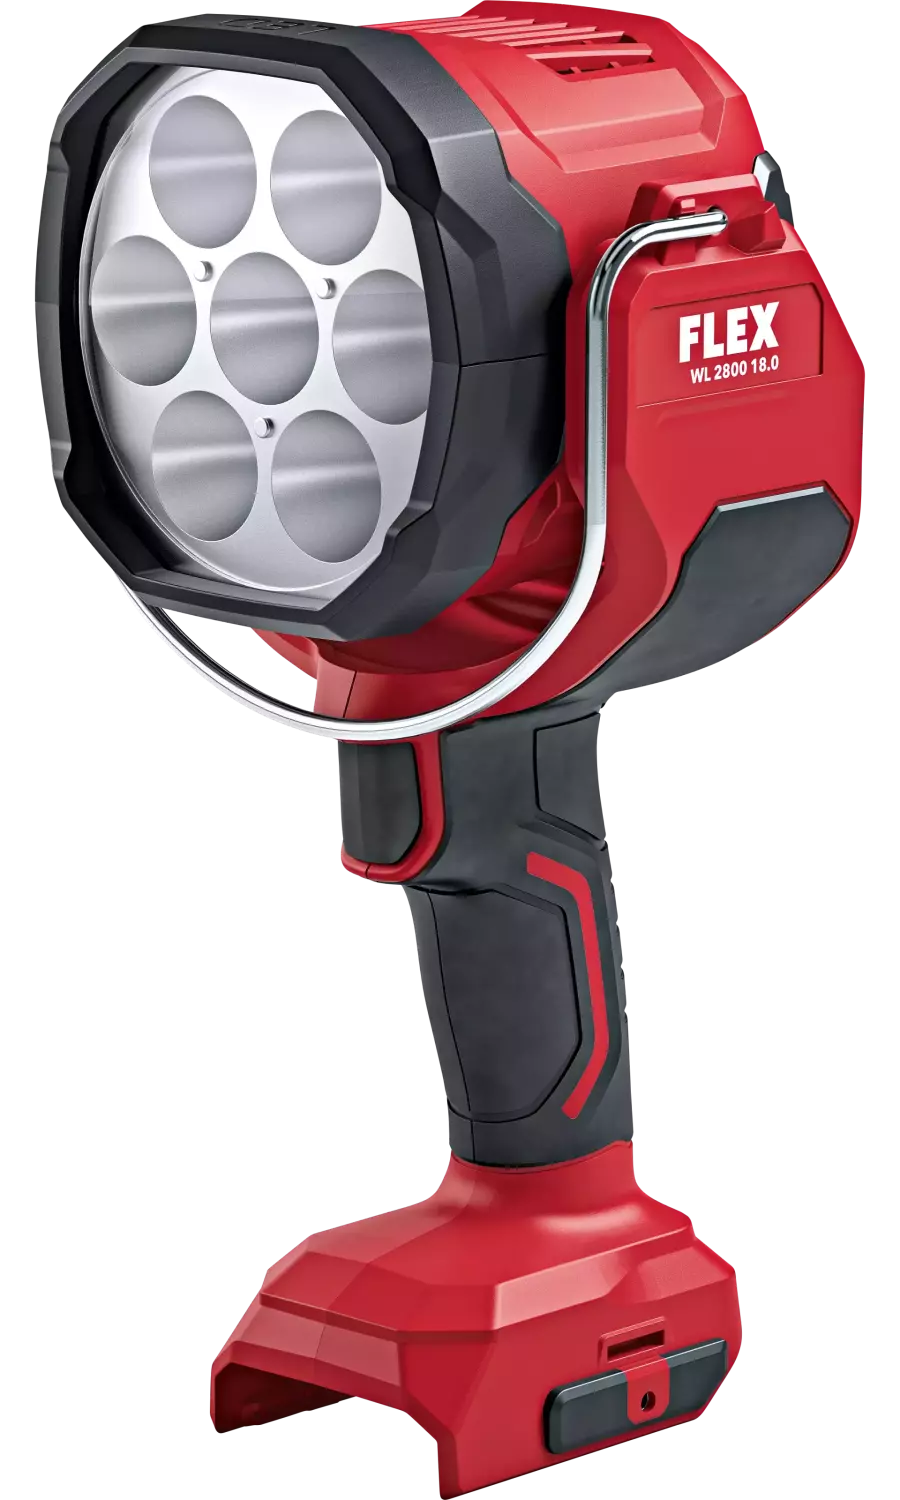 Flex WL 2800 18.0 Li-ion Accu schijnwerper handlamp body - 12/18V-image